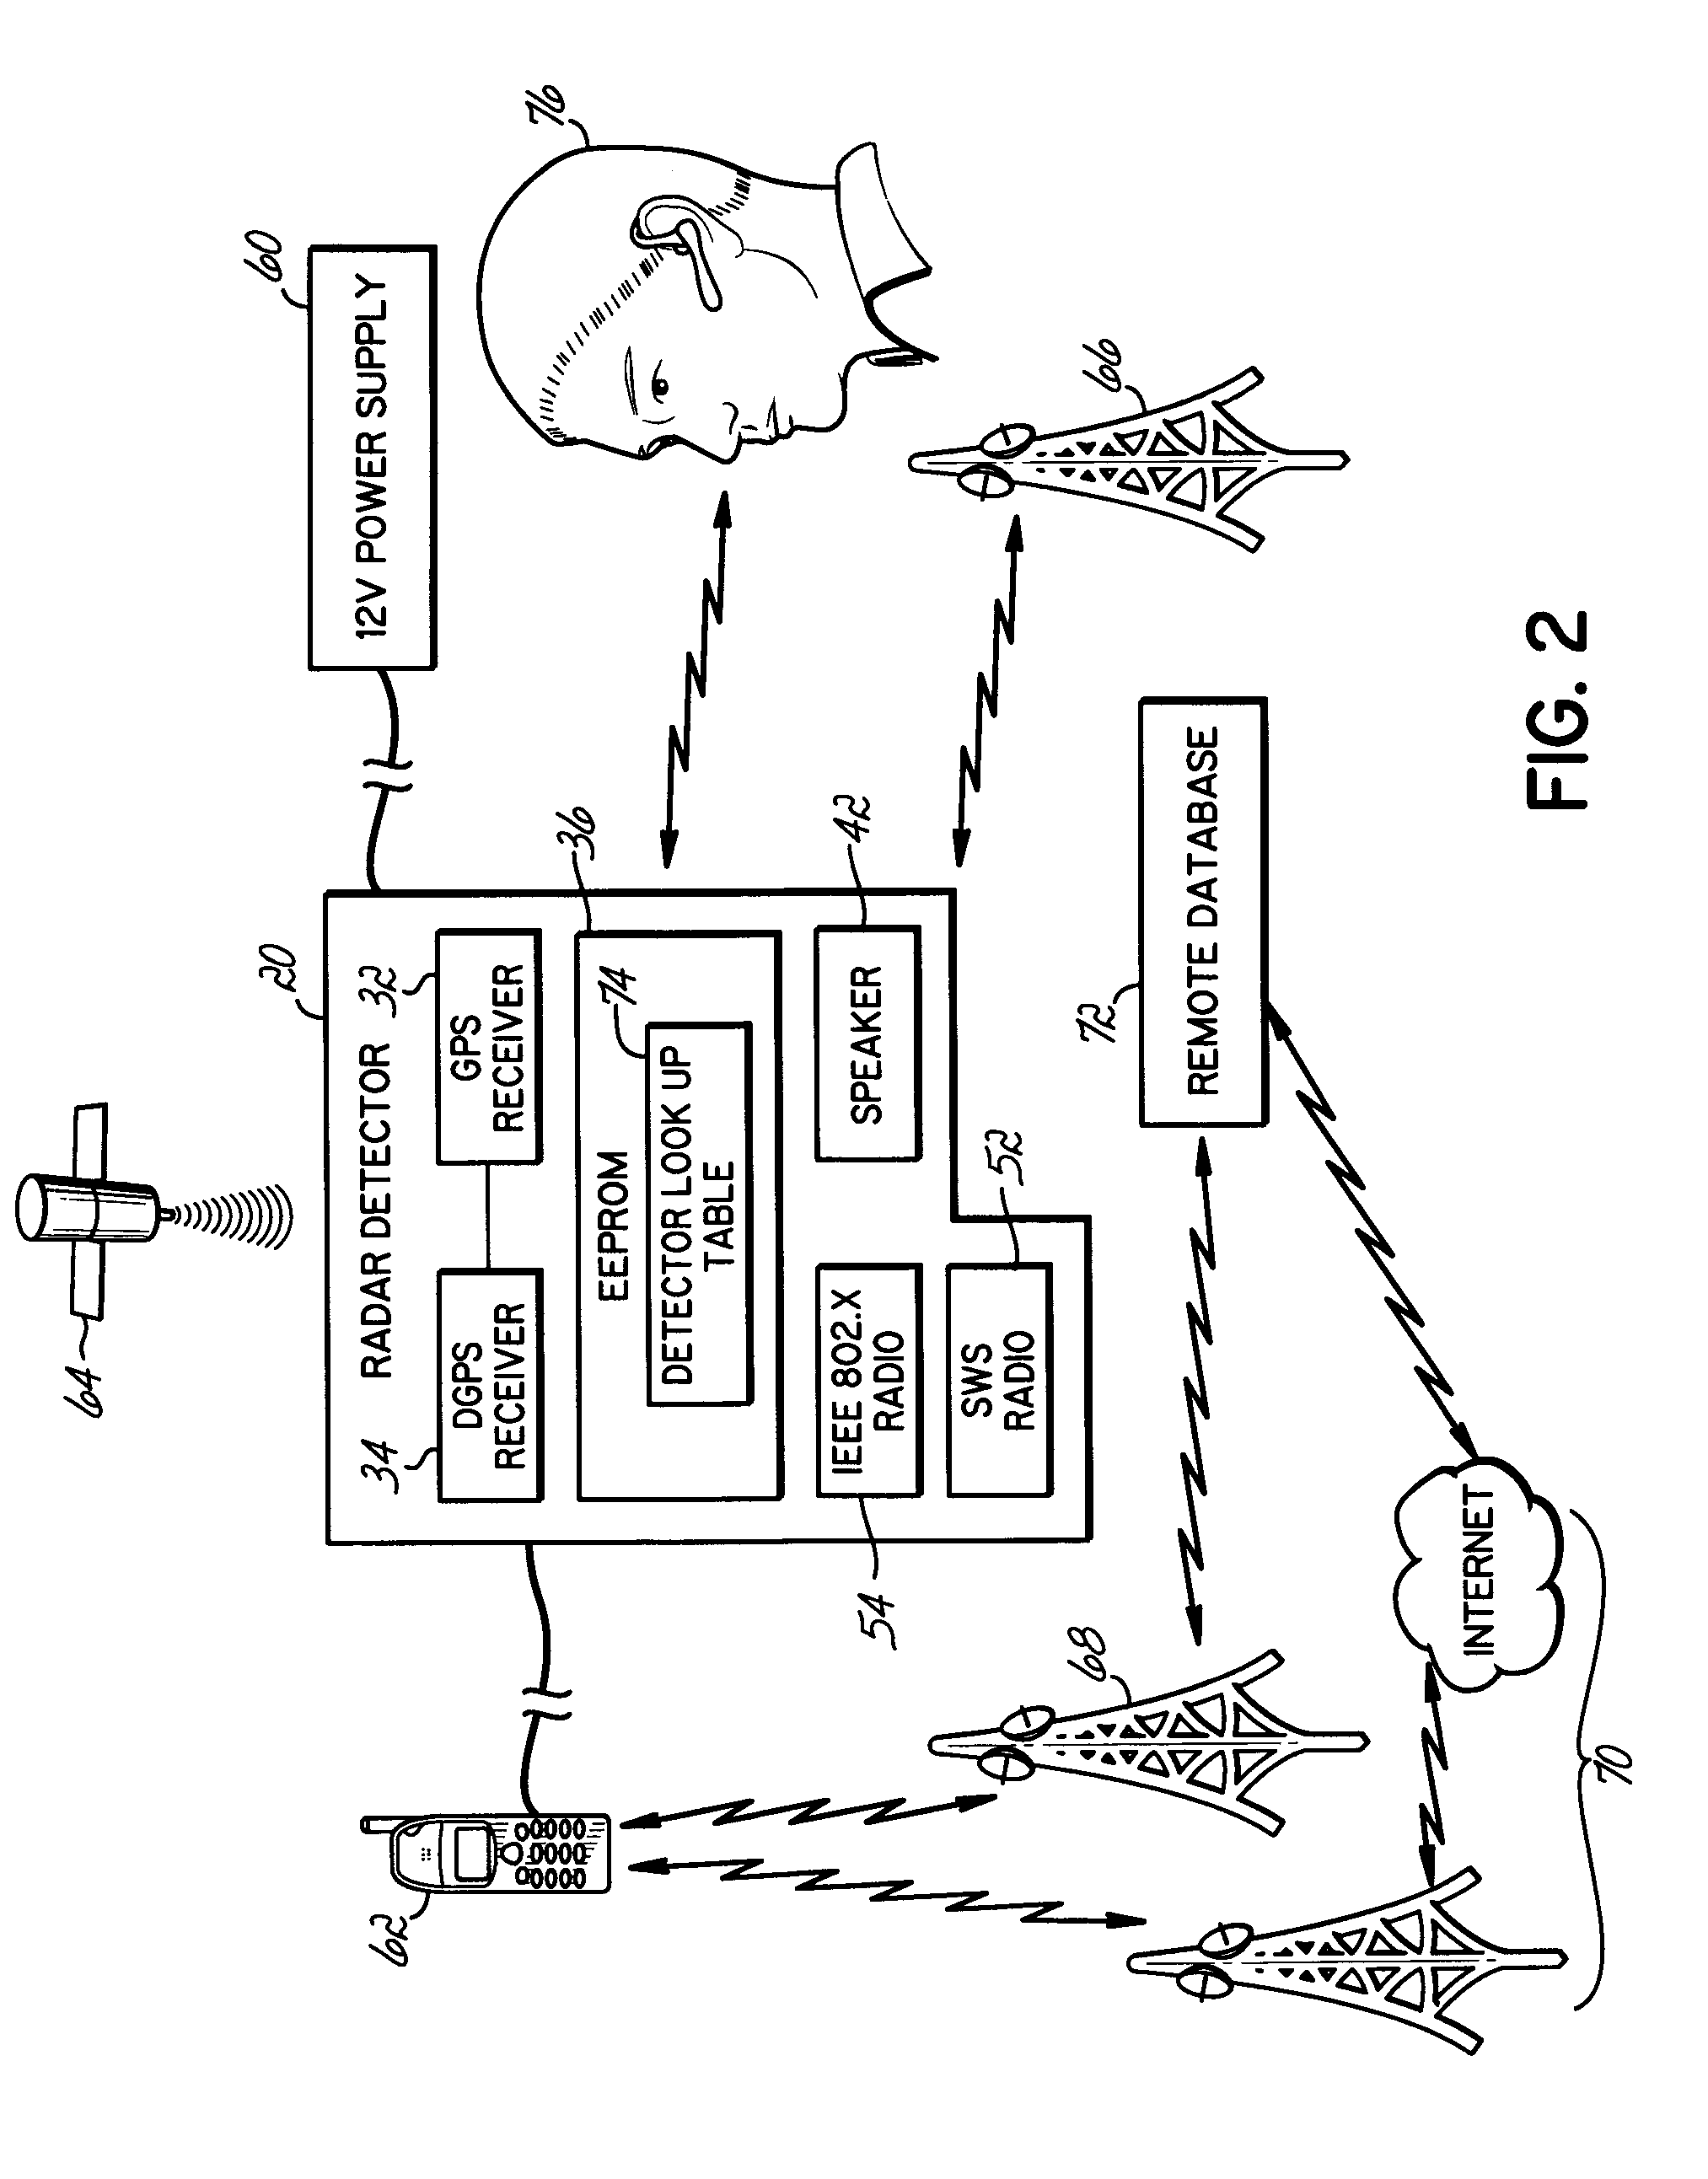 Wireless connectivity in a radar detector